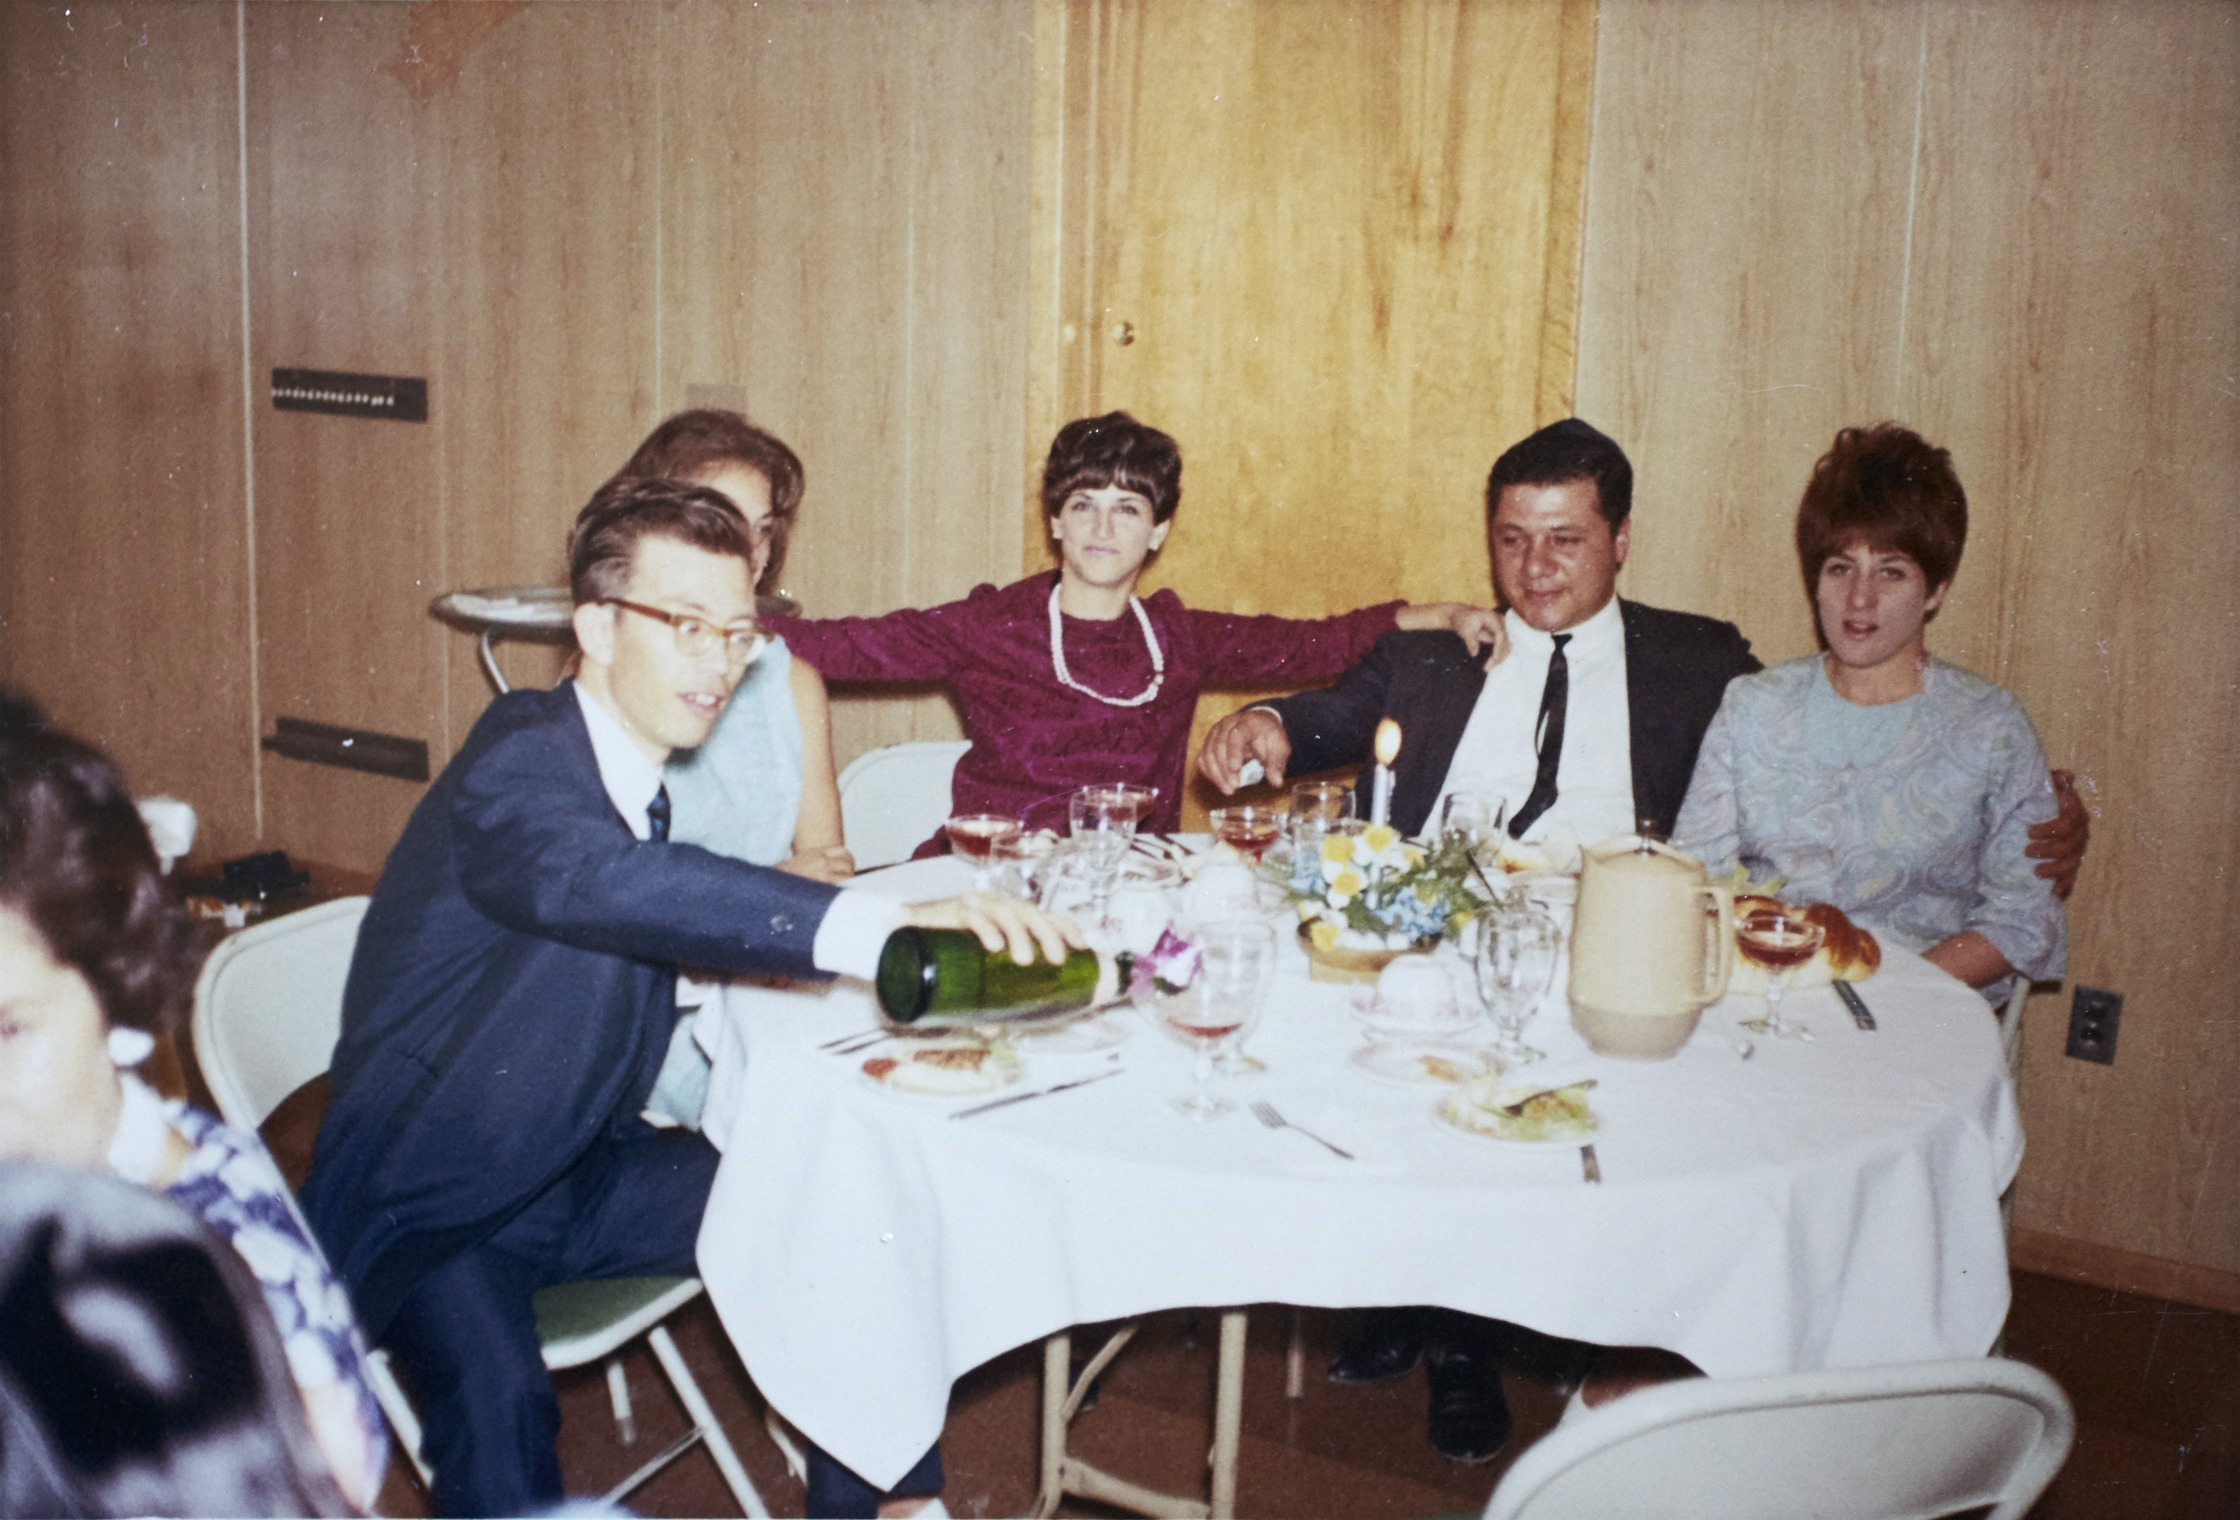 Photograph of wedding reception for David and Iris Torjman, August 1966